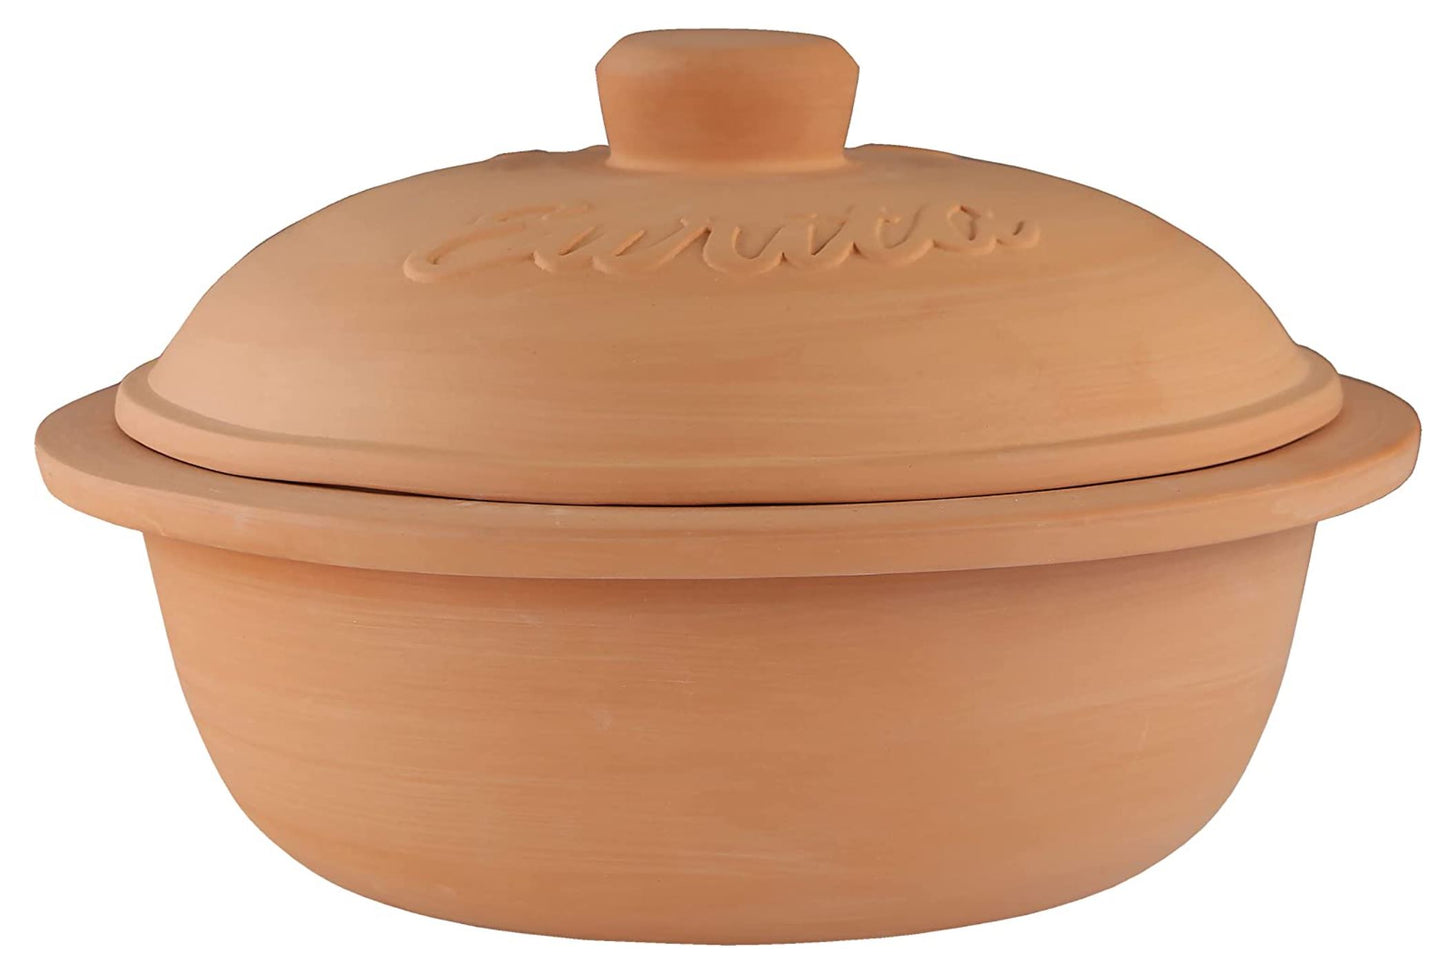 Eurita Round Clay Cooking Pot and Dutch Oven -  4 Quart